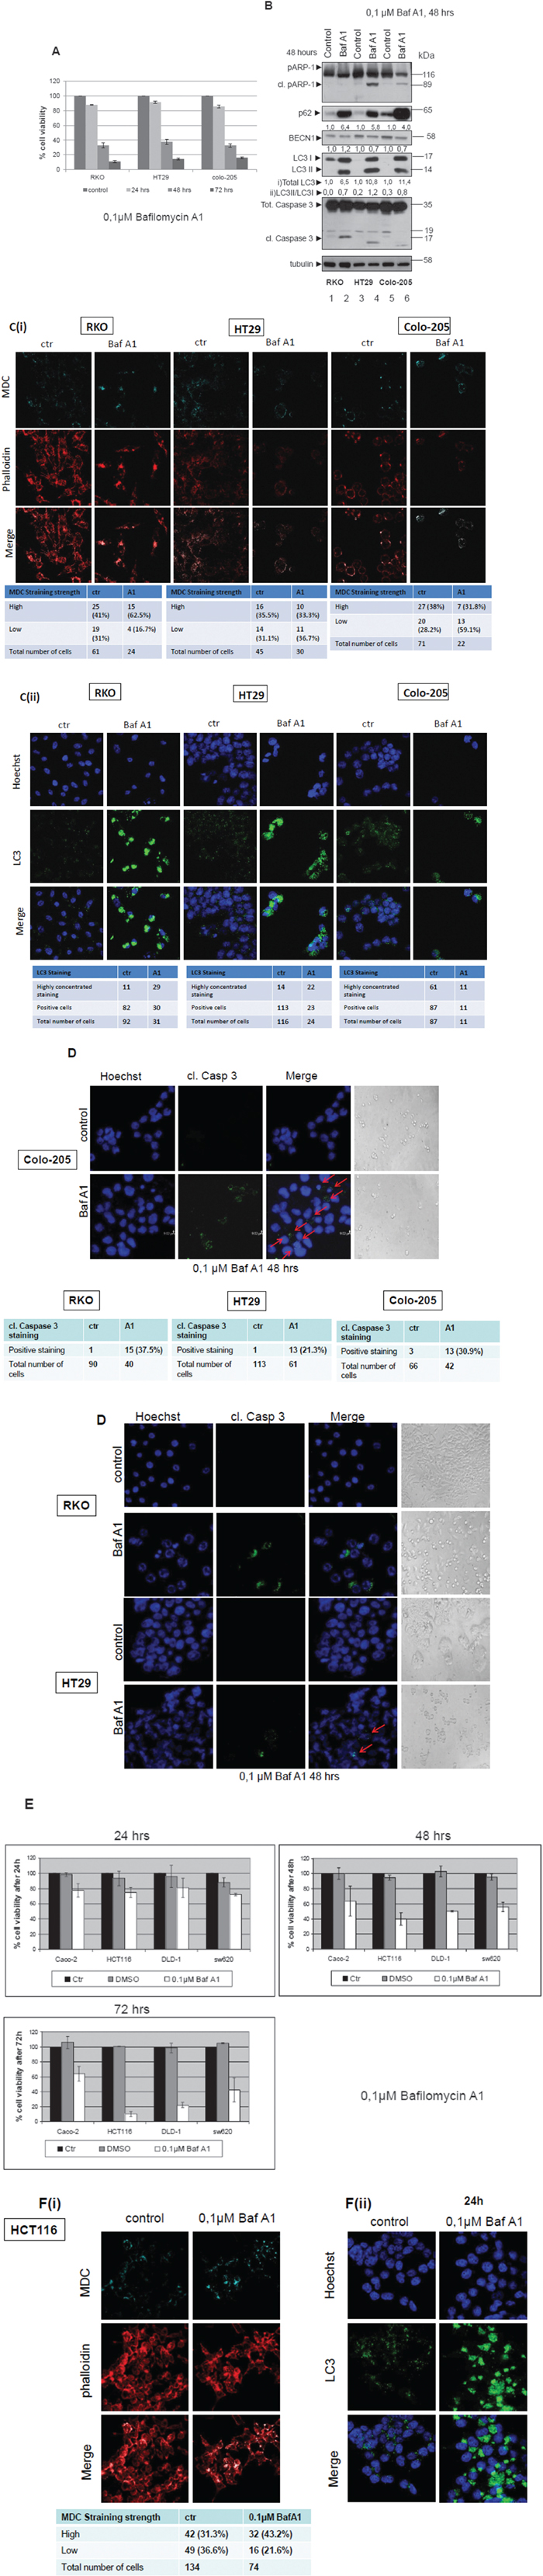 Autophagy inhibitor Bafilomycin A1efficiently sensitizes colorectal adenocarcinoma cells to apoptosis.